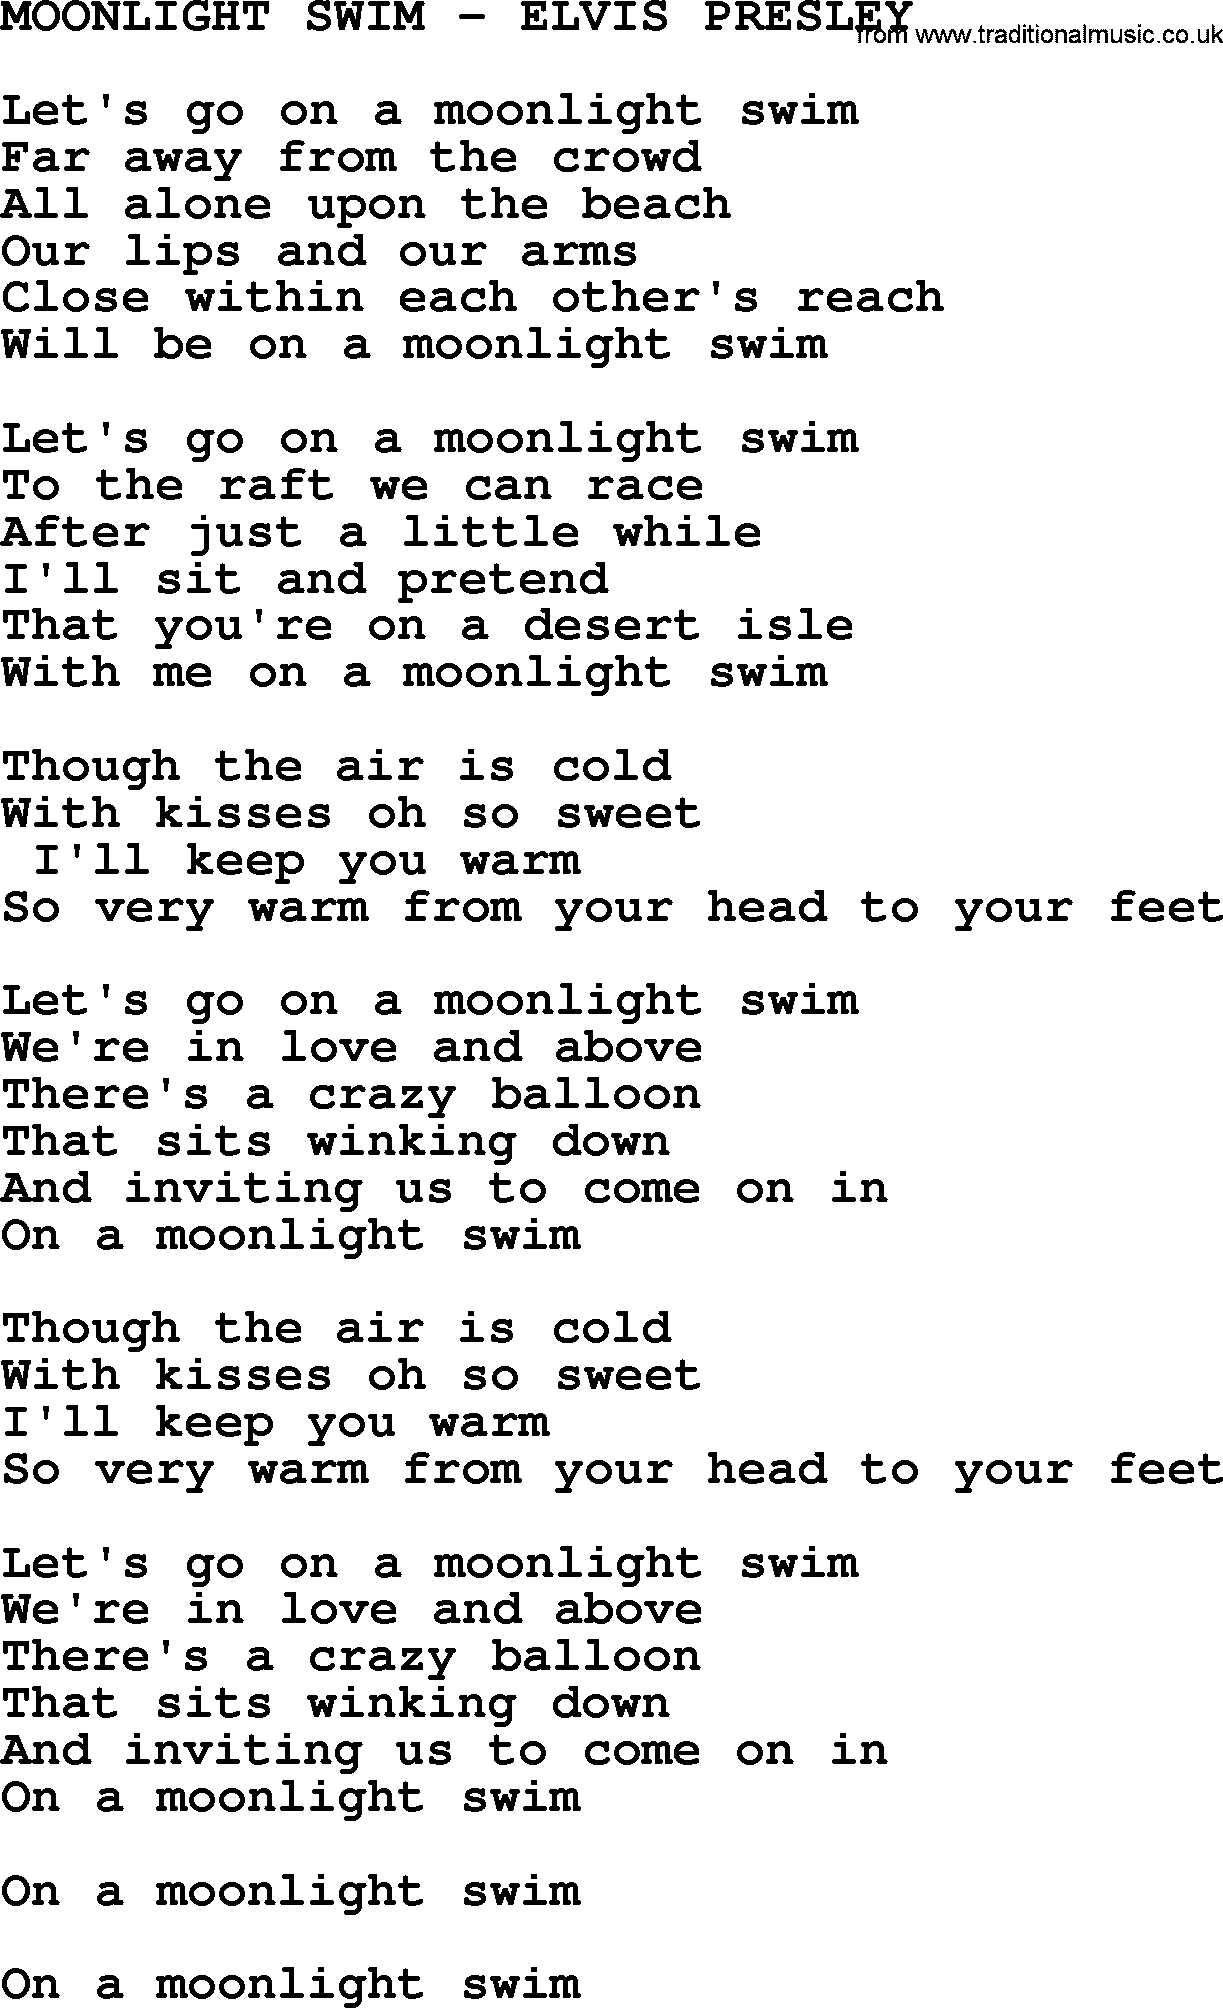 Elvis Presley song: Moonlight Swim-Elvis Presley-.txt lyrics and chords